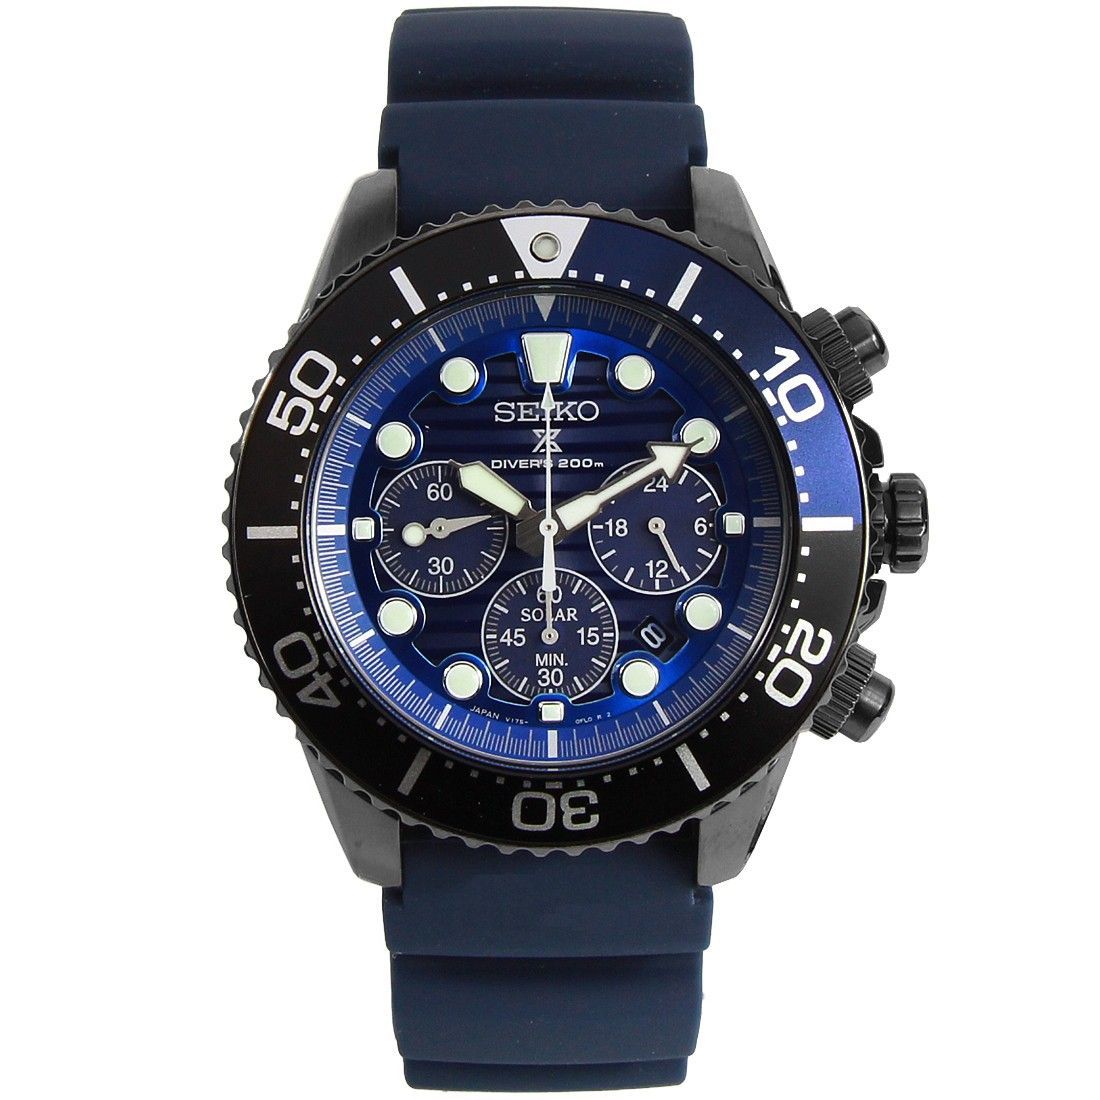 Seiko Solar Prospex SBDL057 Blue Rubber Chronograph Diving Watch -Seiko